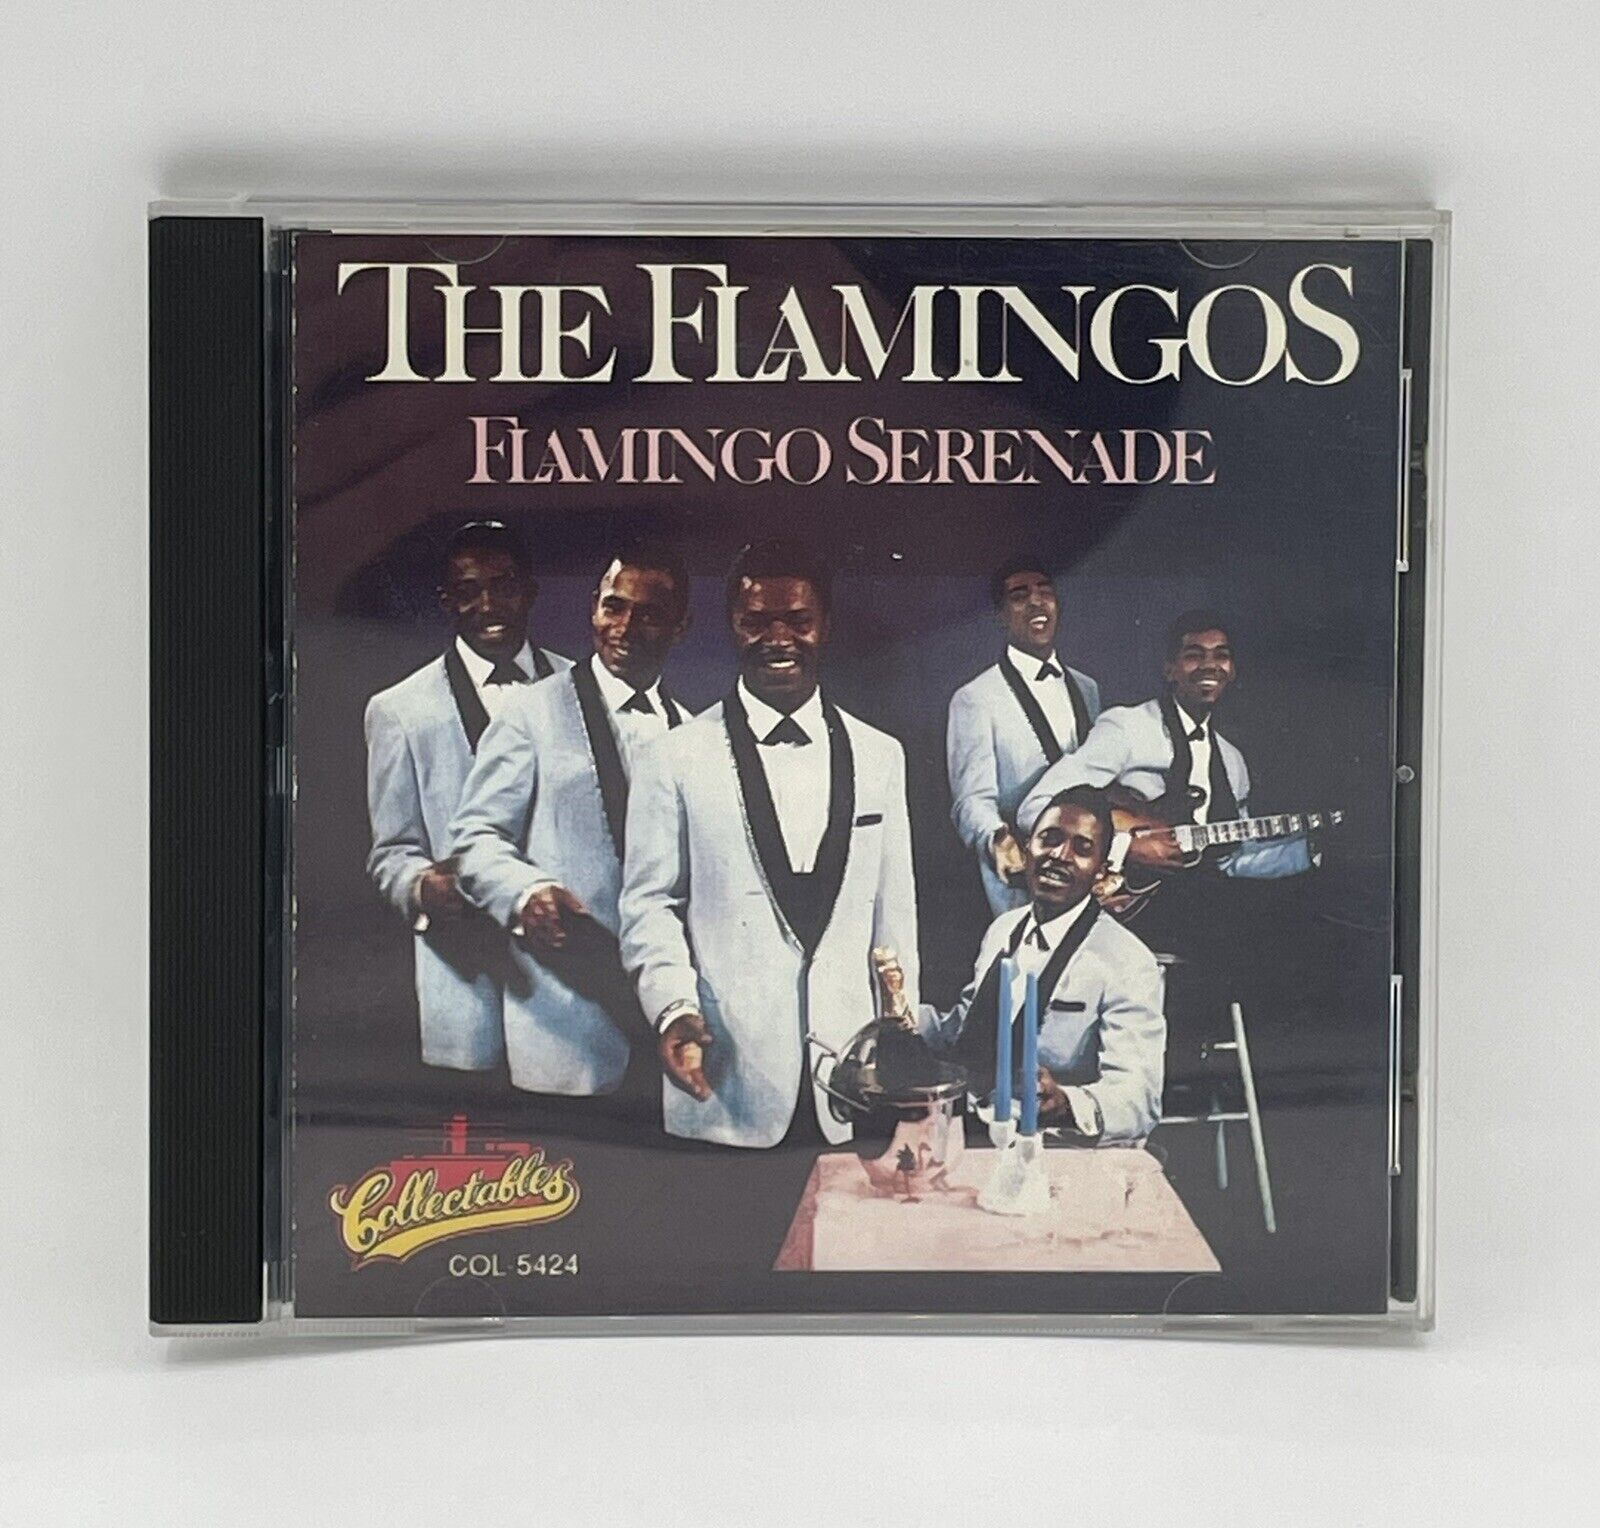 The Flamingos Flamingo Serenade CD 1991